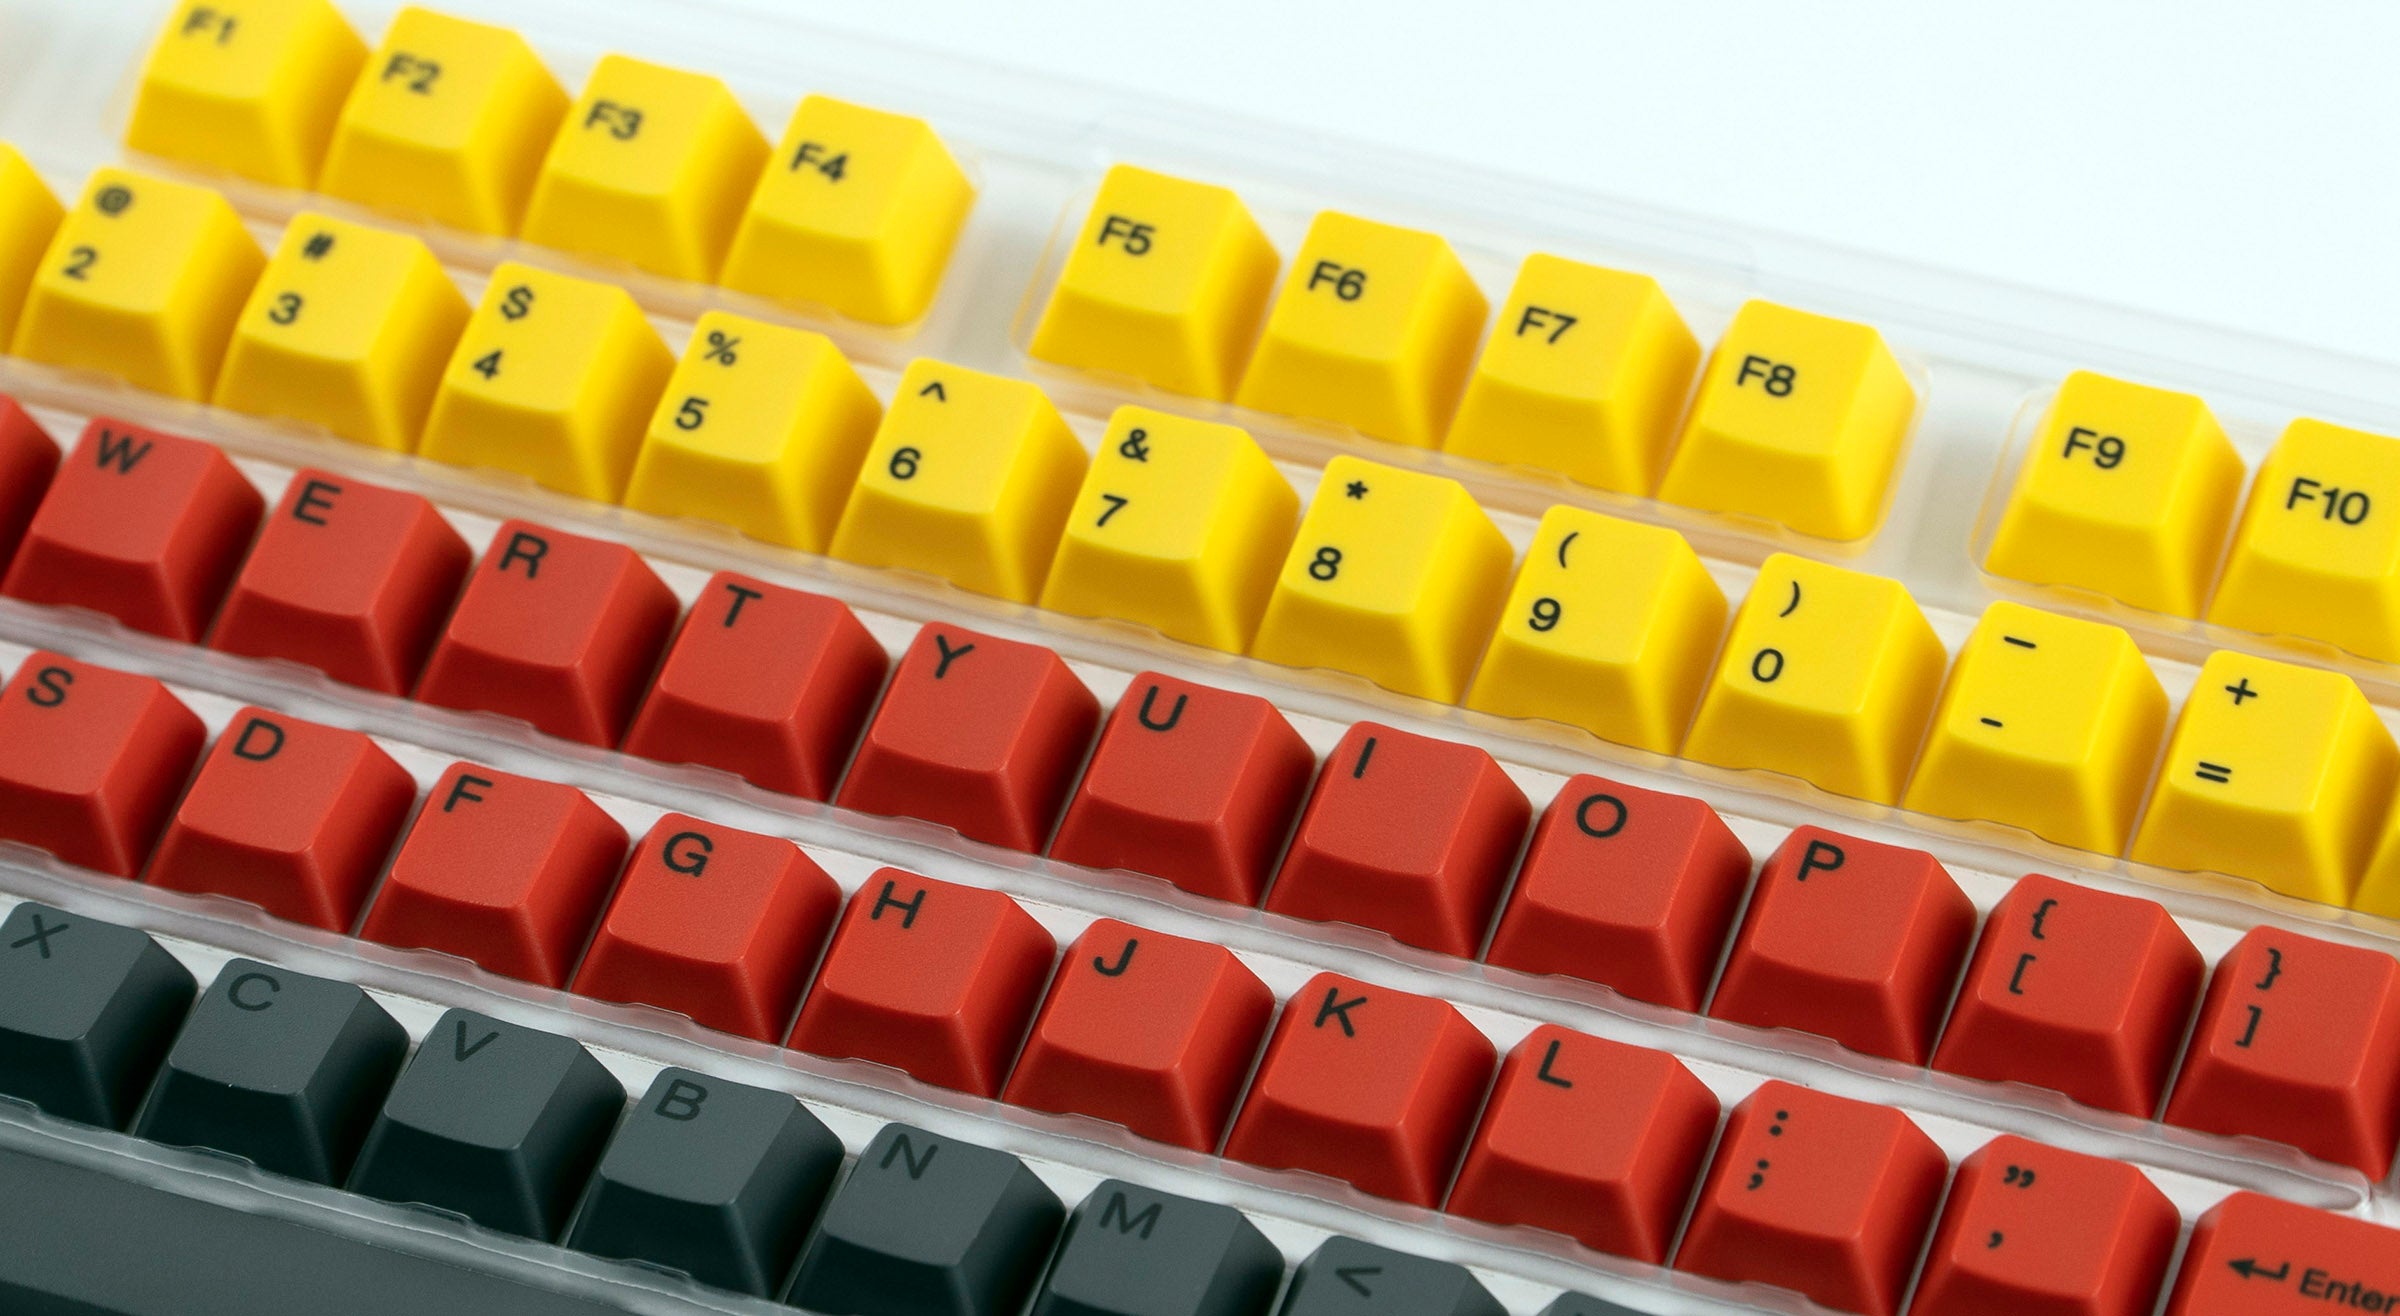 Varmilo 108-Key Dye Sub PBT Keycap Set Yellow Red and Black Lava MKZ7G3NSMK |34131|